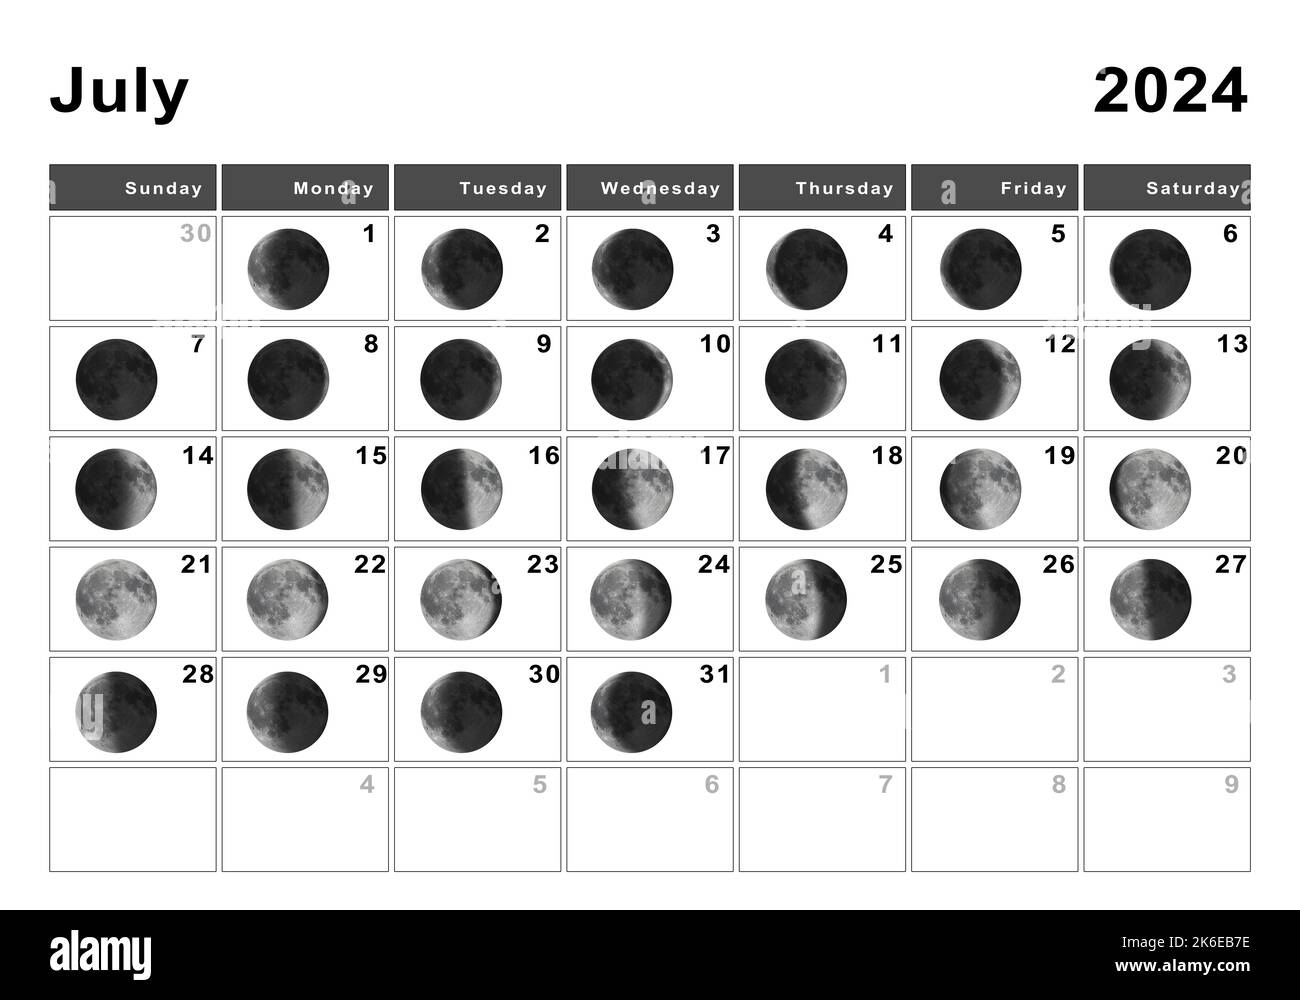 July 2024 Lunar Calendar, Moon Cycles, Moon Phases Stock Photo - Alamy | Calendar 2024